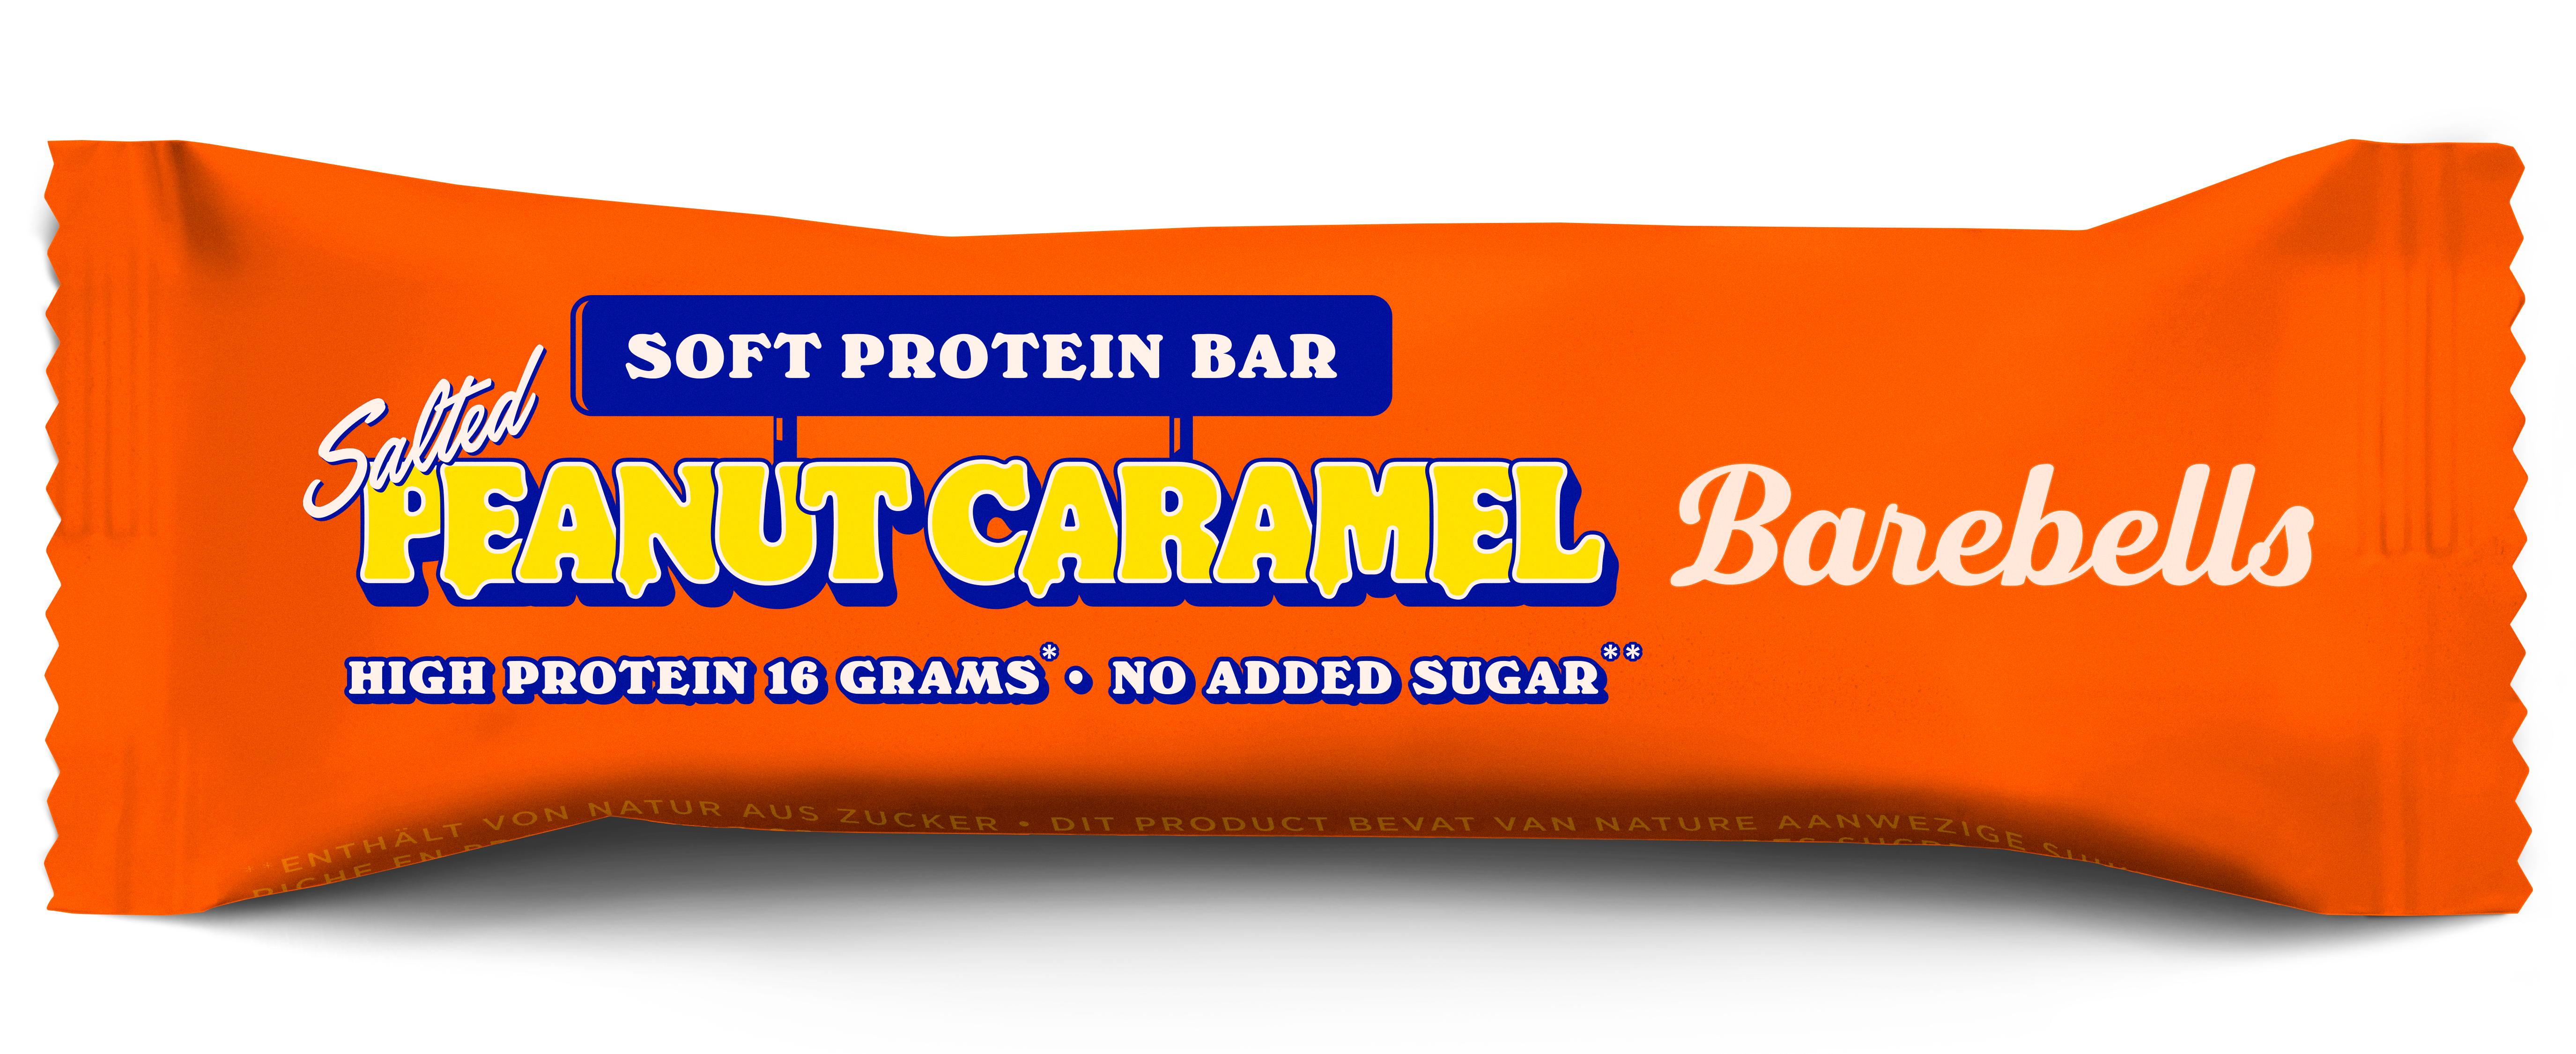 Soft Salted Peanut Caramel